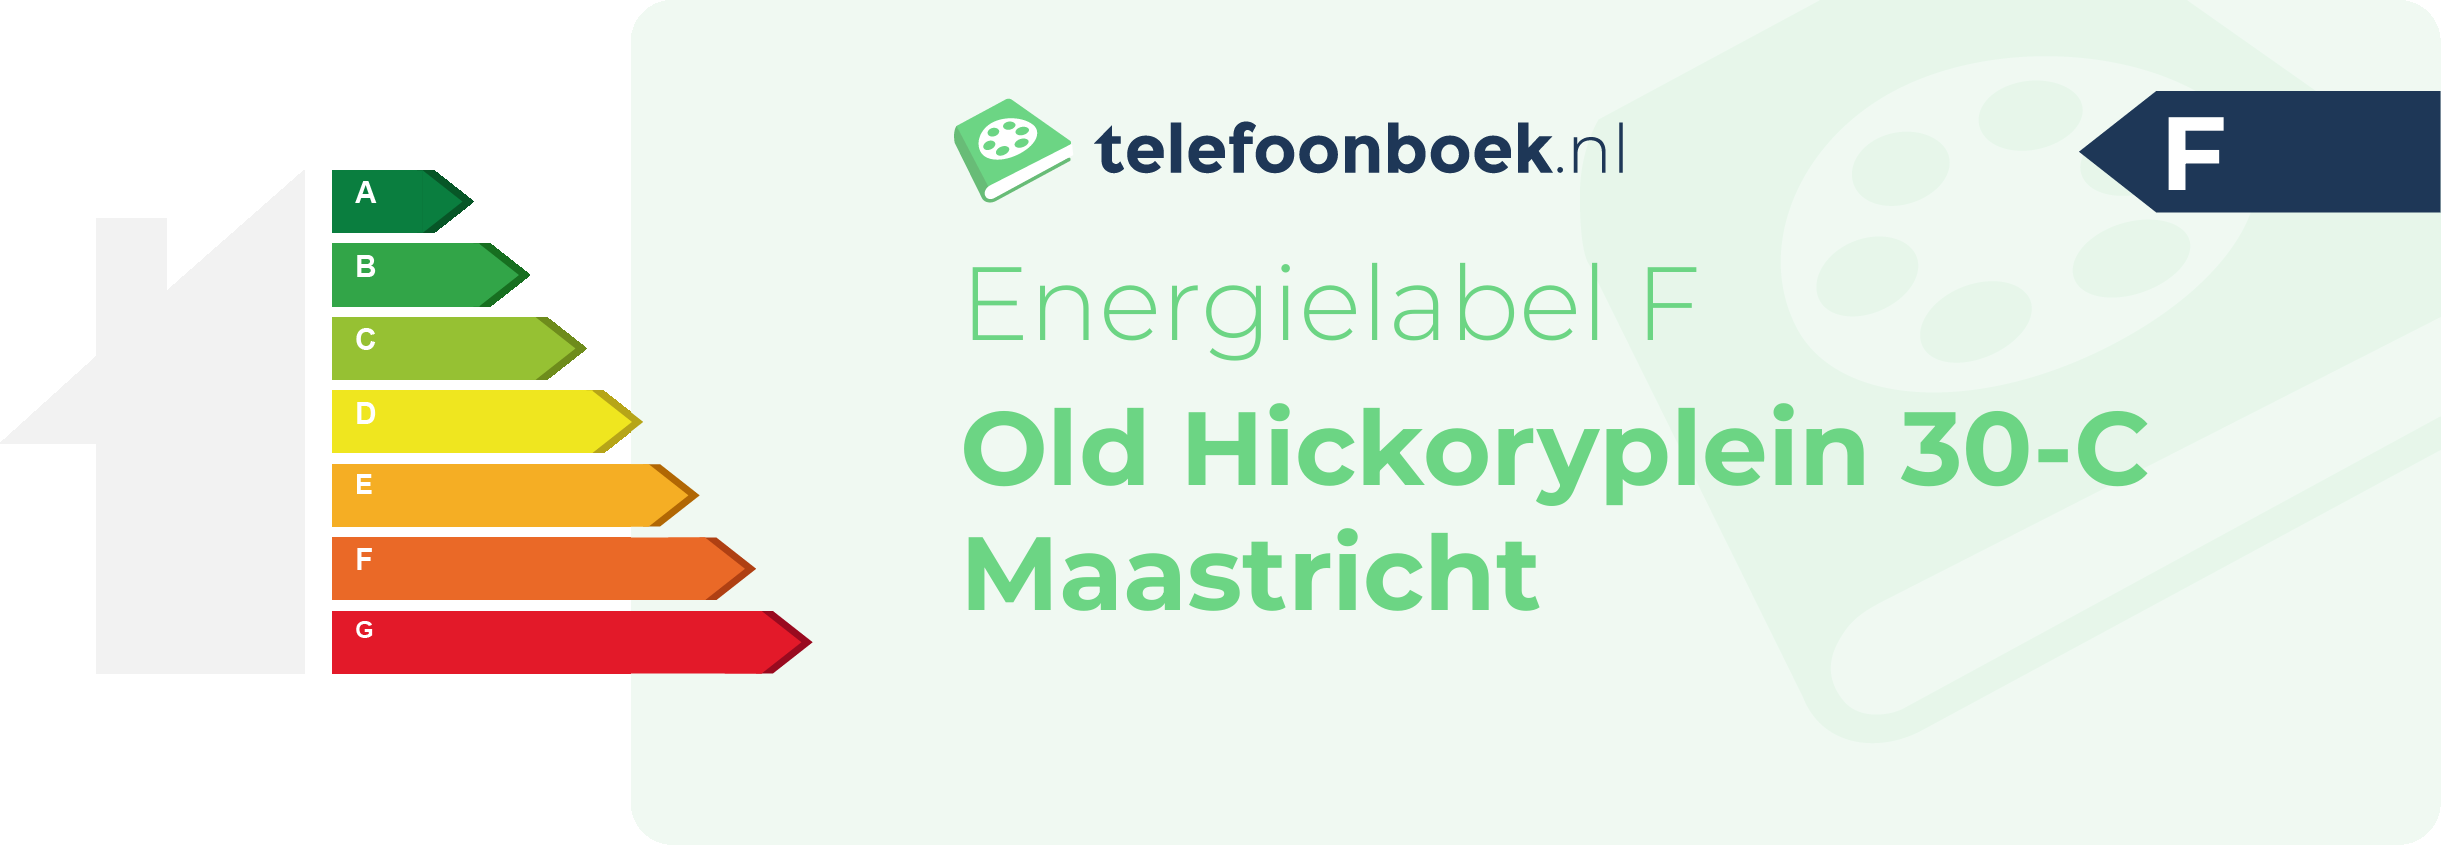 Energielabel Old Hickoryplein 30-C Maastricht